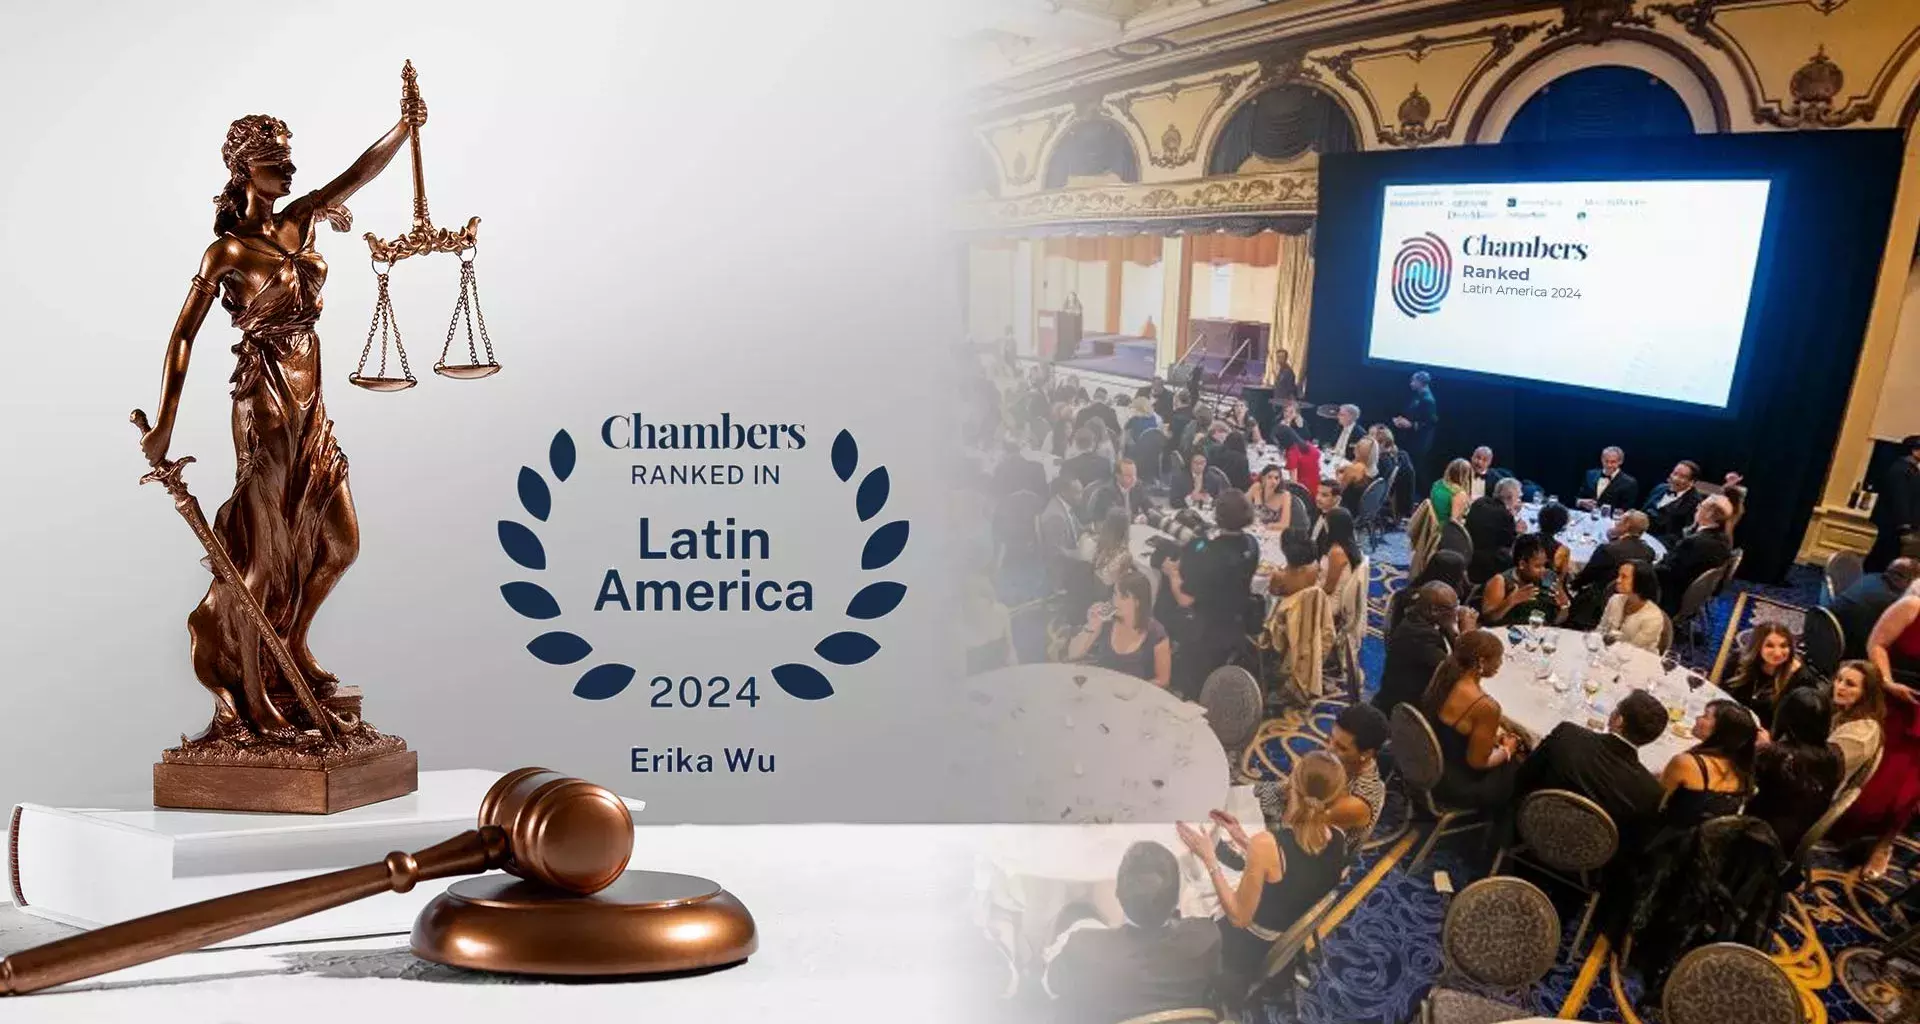 Abogada EXATEC de PrepaTec Obregón entra las mejores abogadas de latinoamérica, según Chambers&Partners